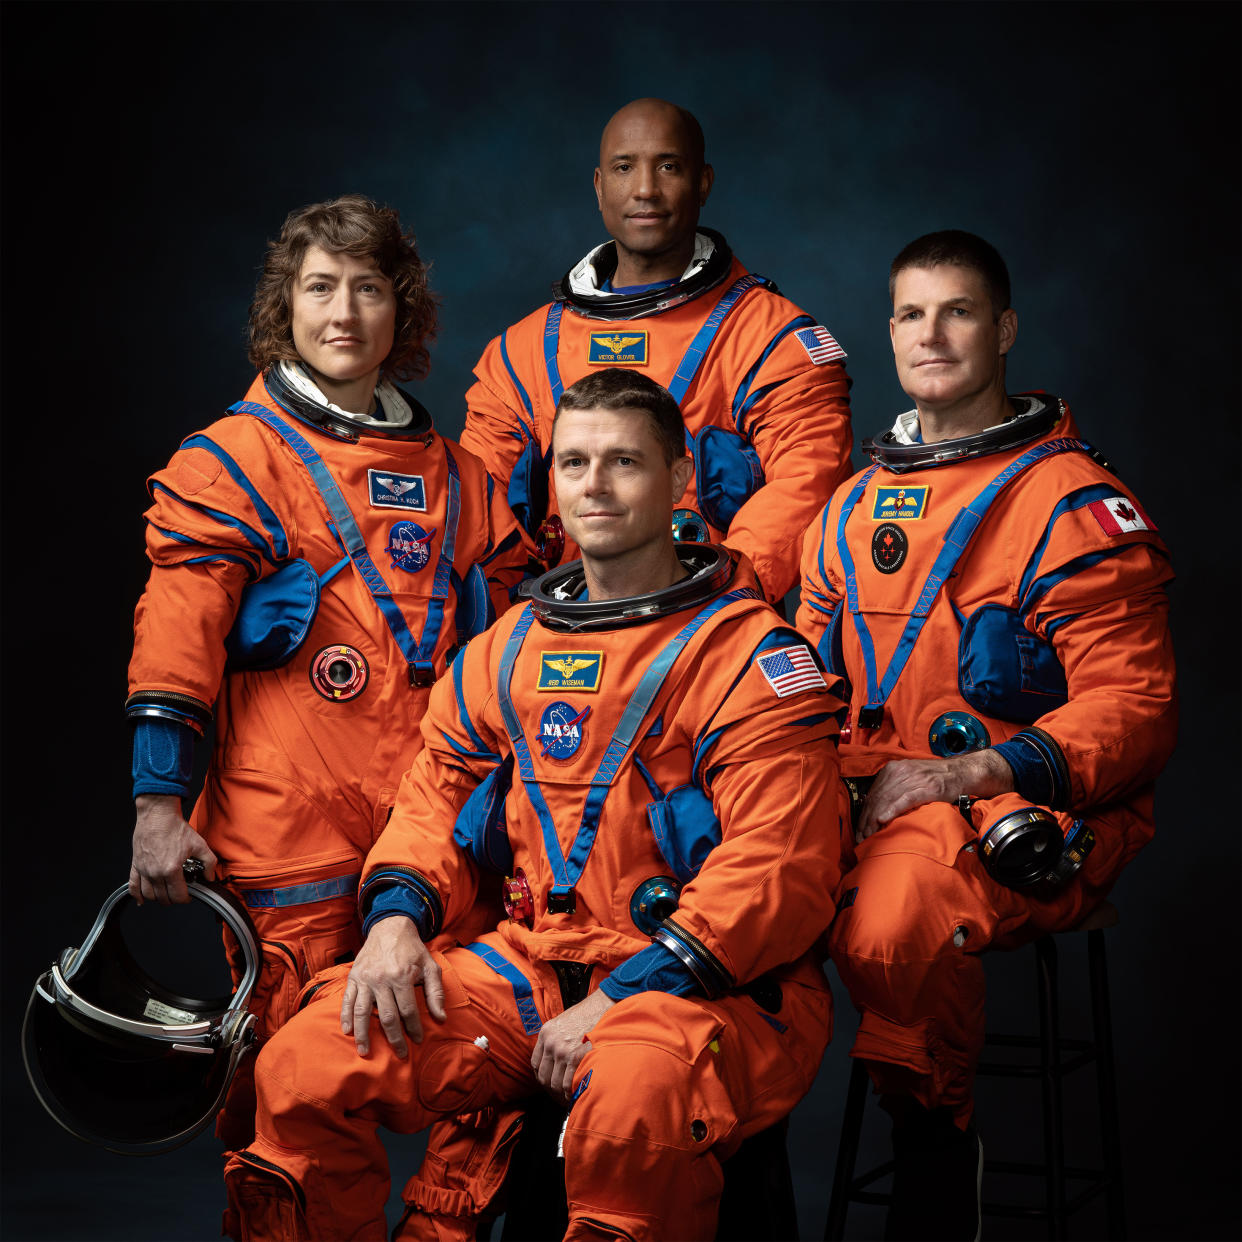 Clockwise from left: Christina Koch, Victor Glover, Jeremy Hansen and Reid Wiseman.  (Josh Valcarcel/NASA)